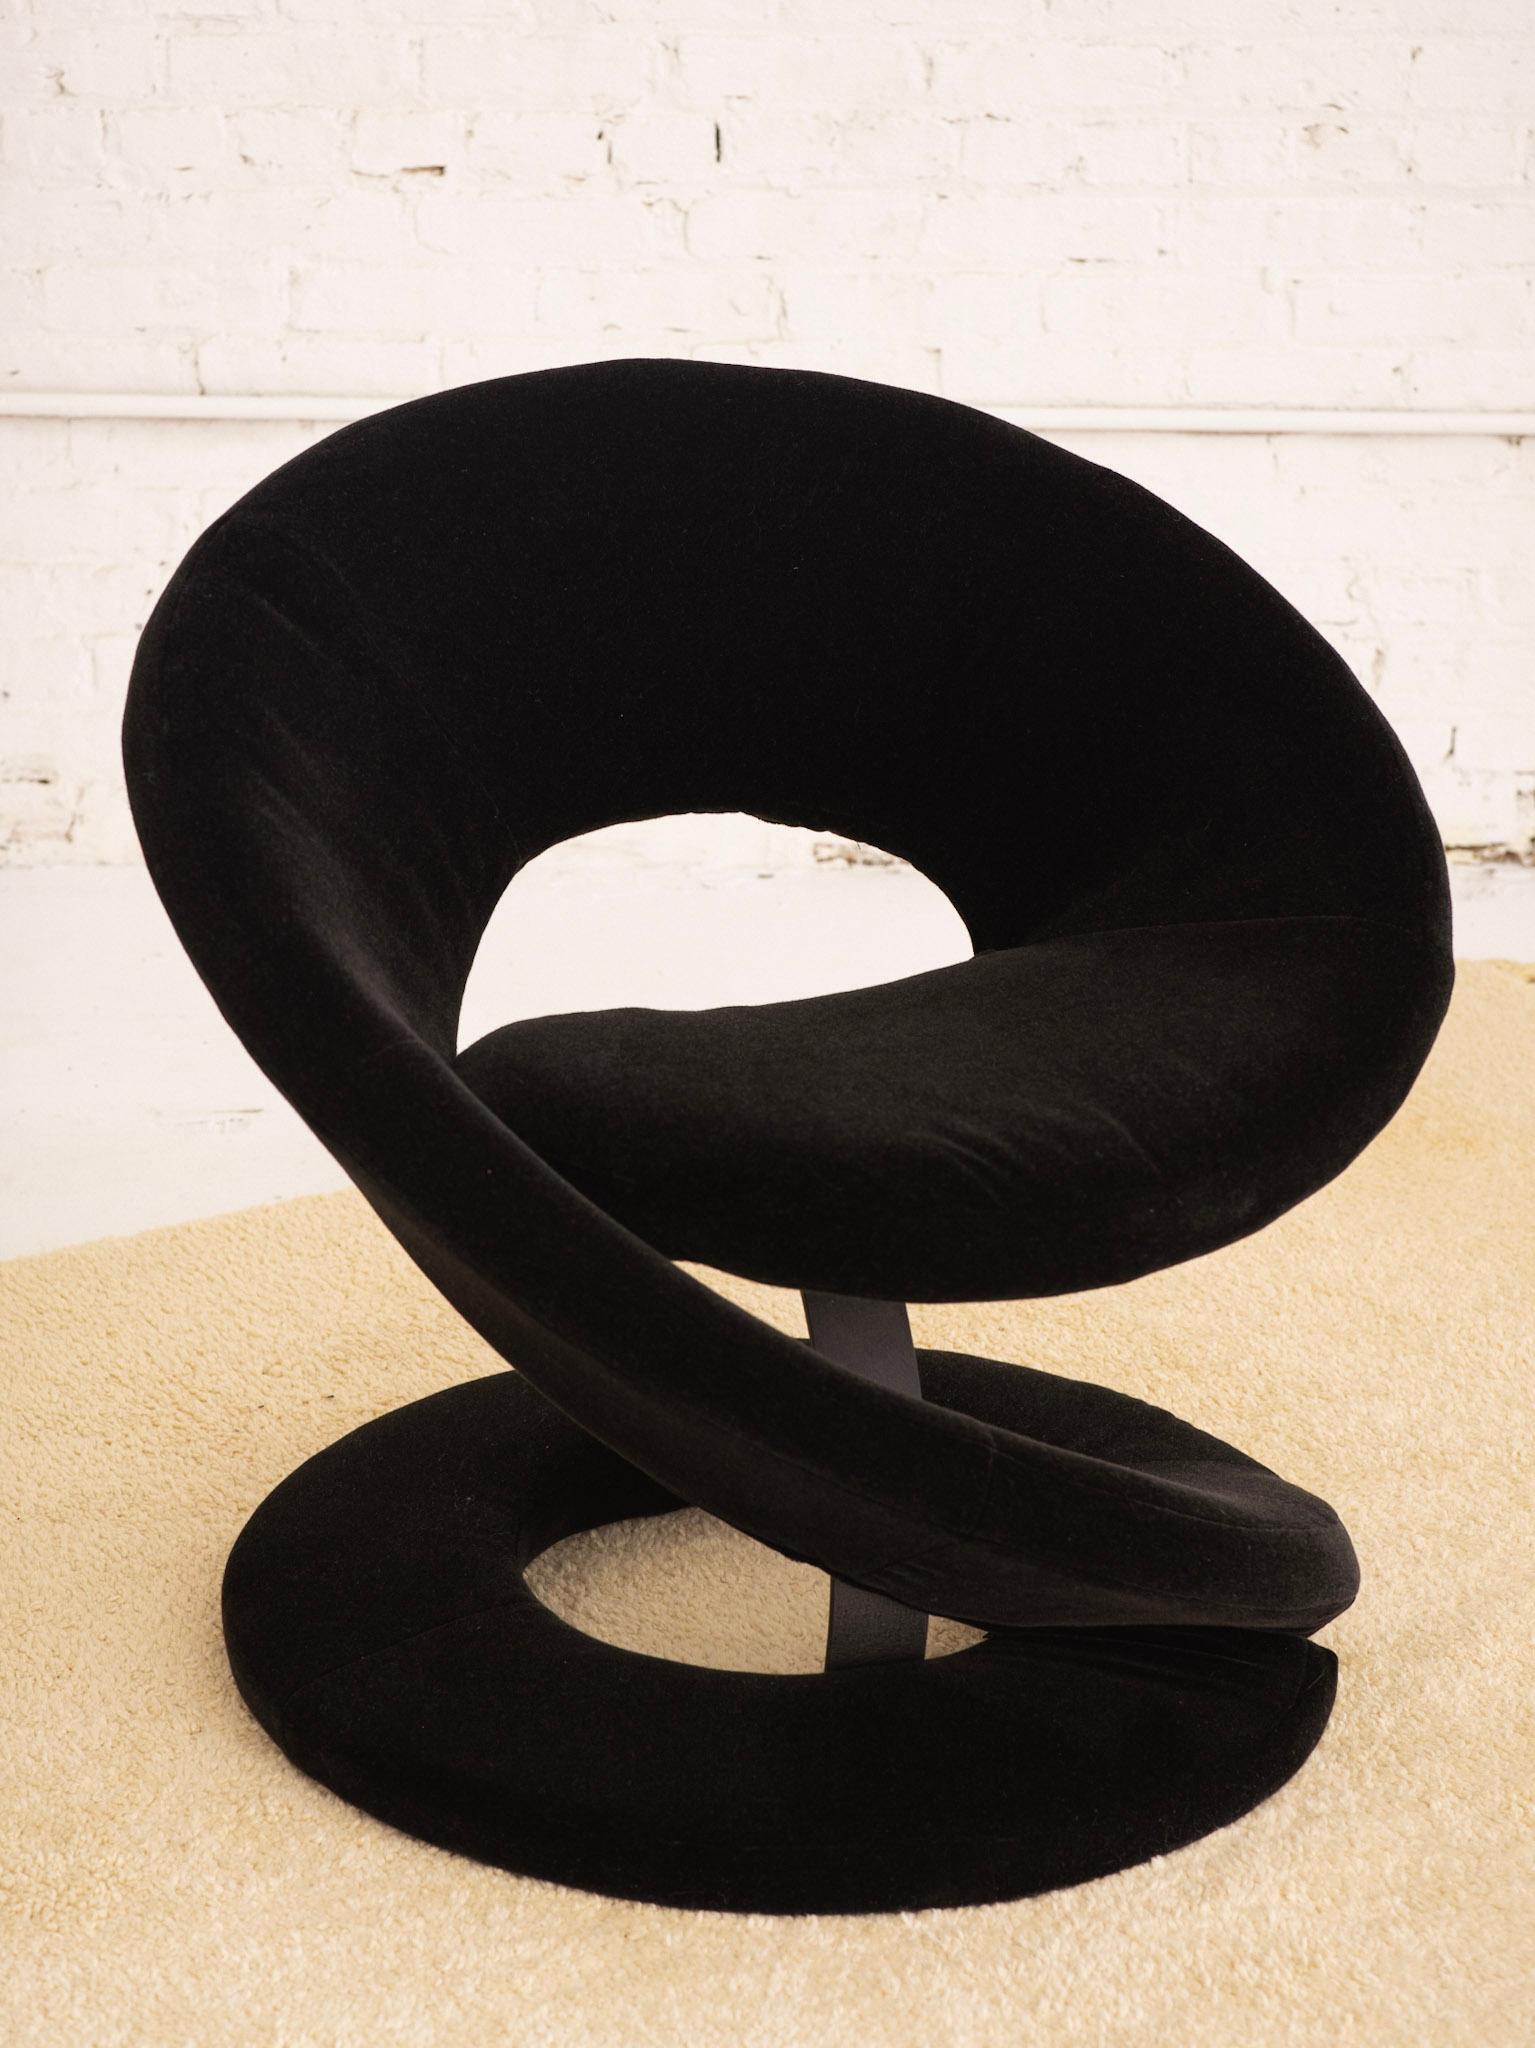 jaymar spiral chair